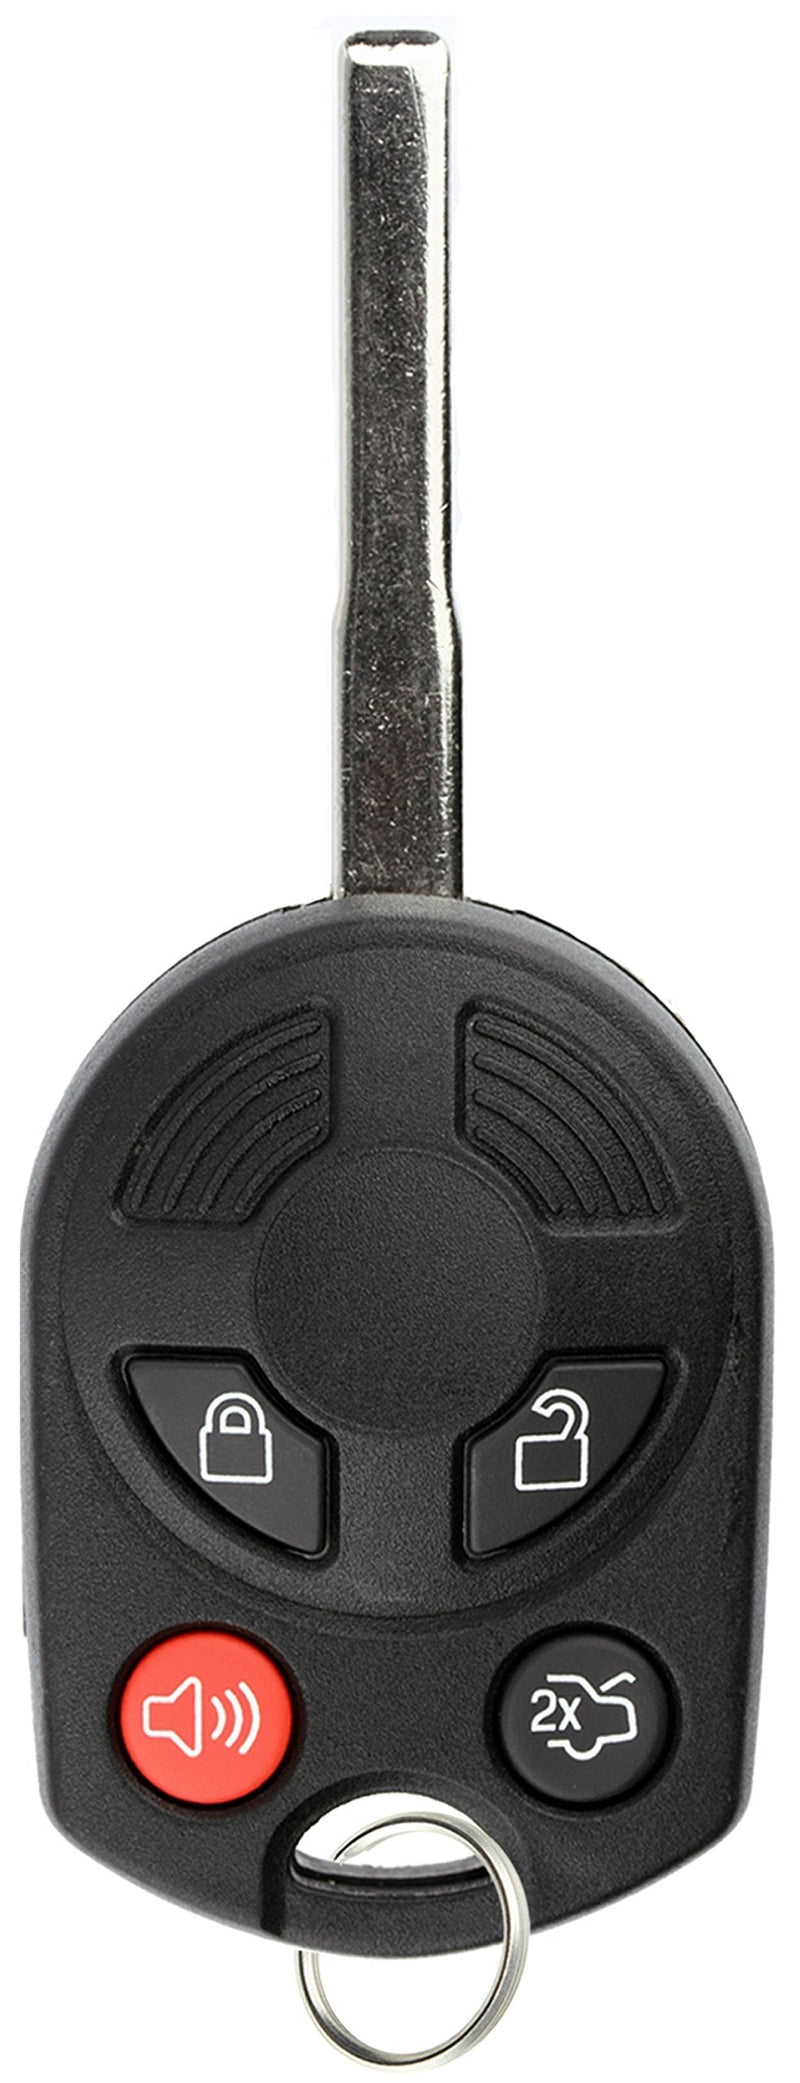  [AUSTRALIA] - KeylessOption Keyless Entry Remote Car Uncut High Security Key Fob for 164-R8007 Ford Focus Escape Transit Connect